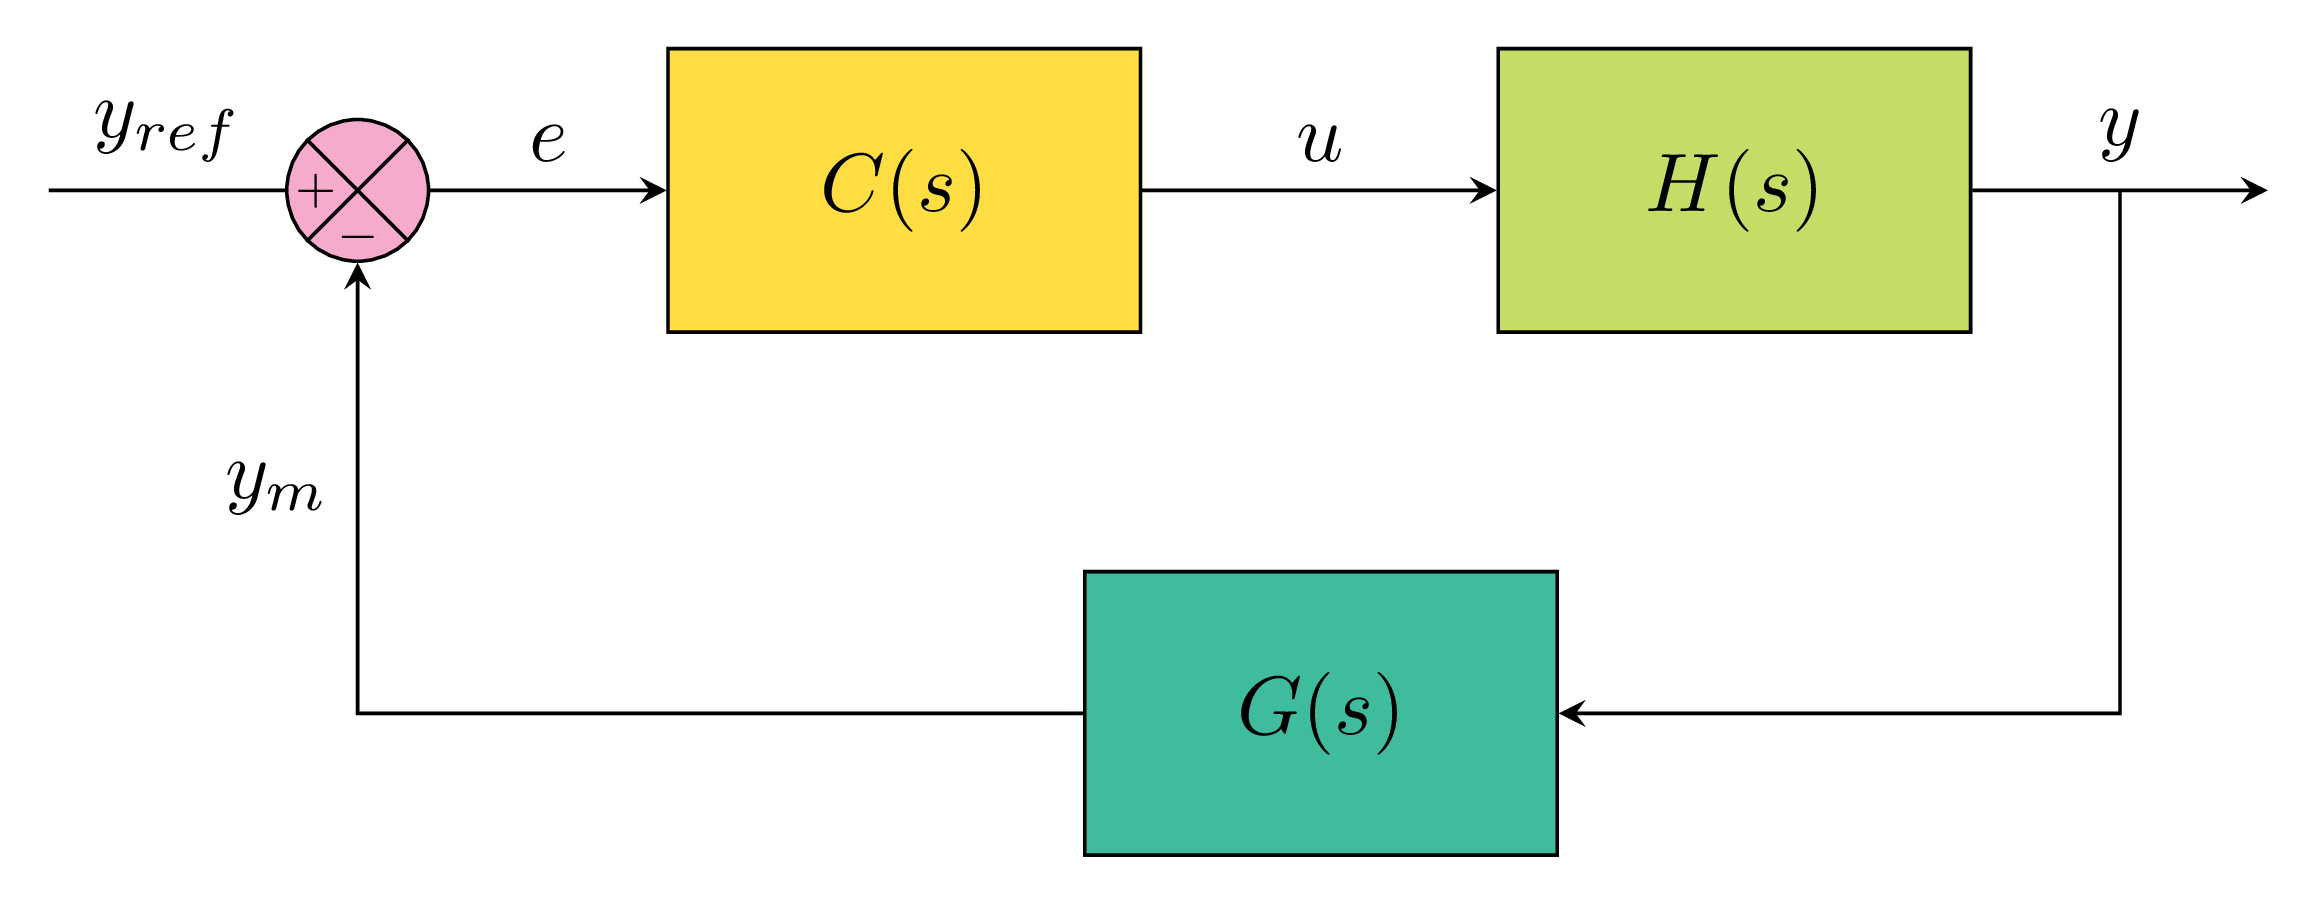 block diagram in LaTeX using TikZ